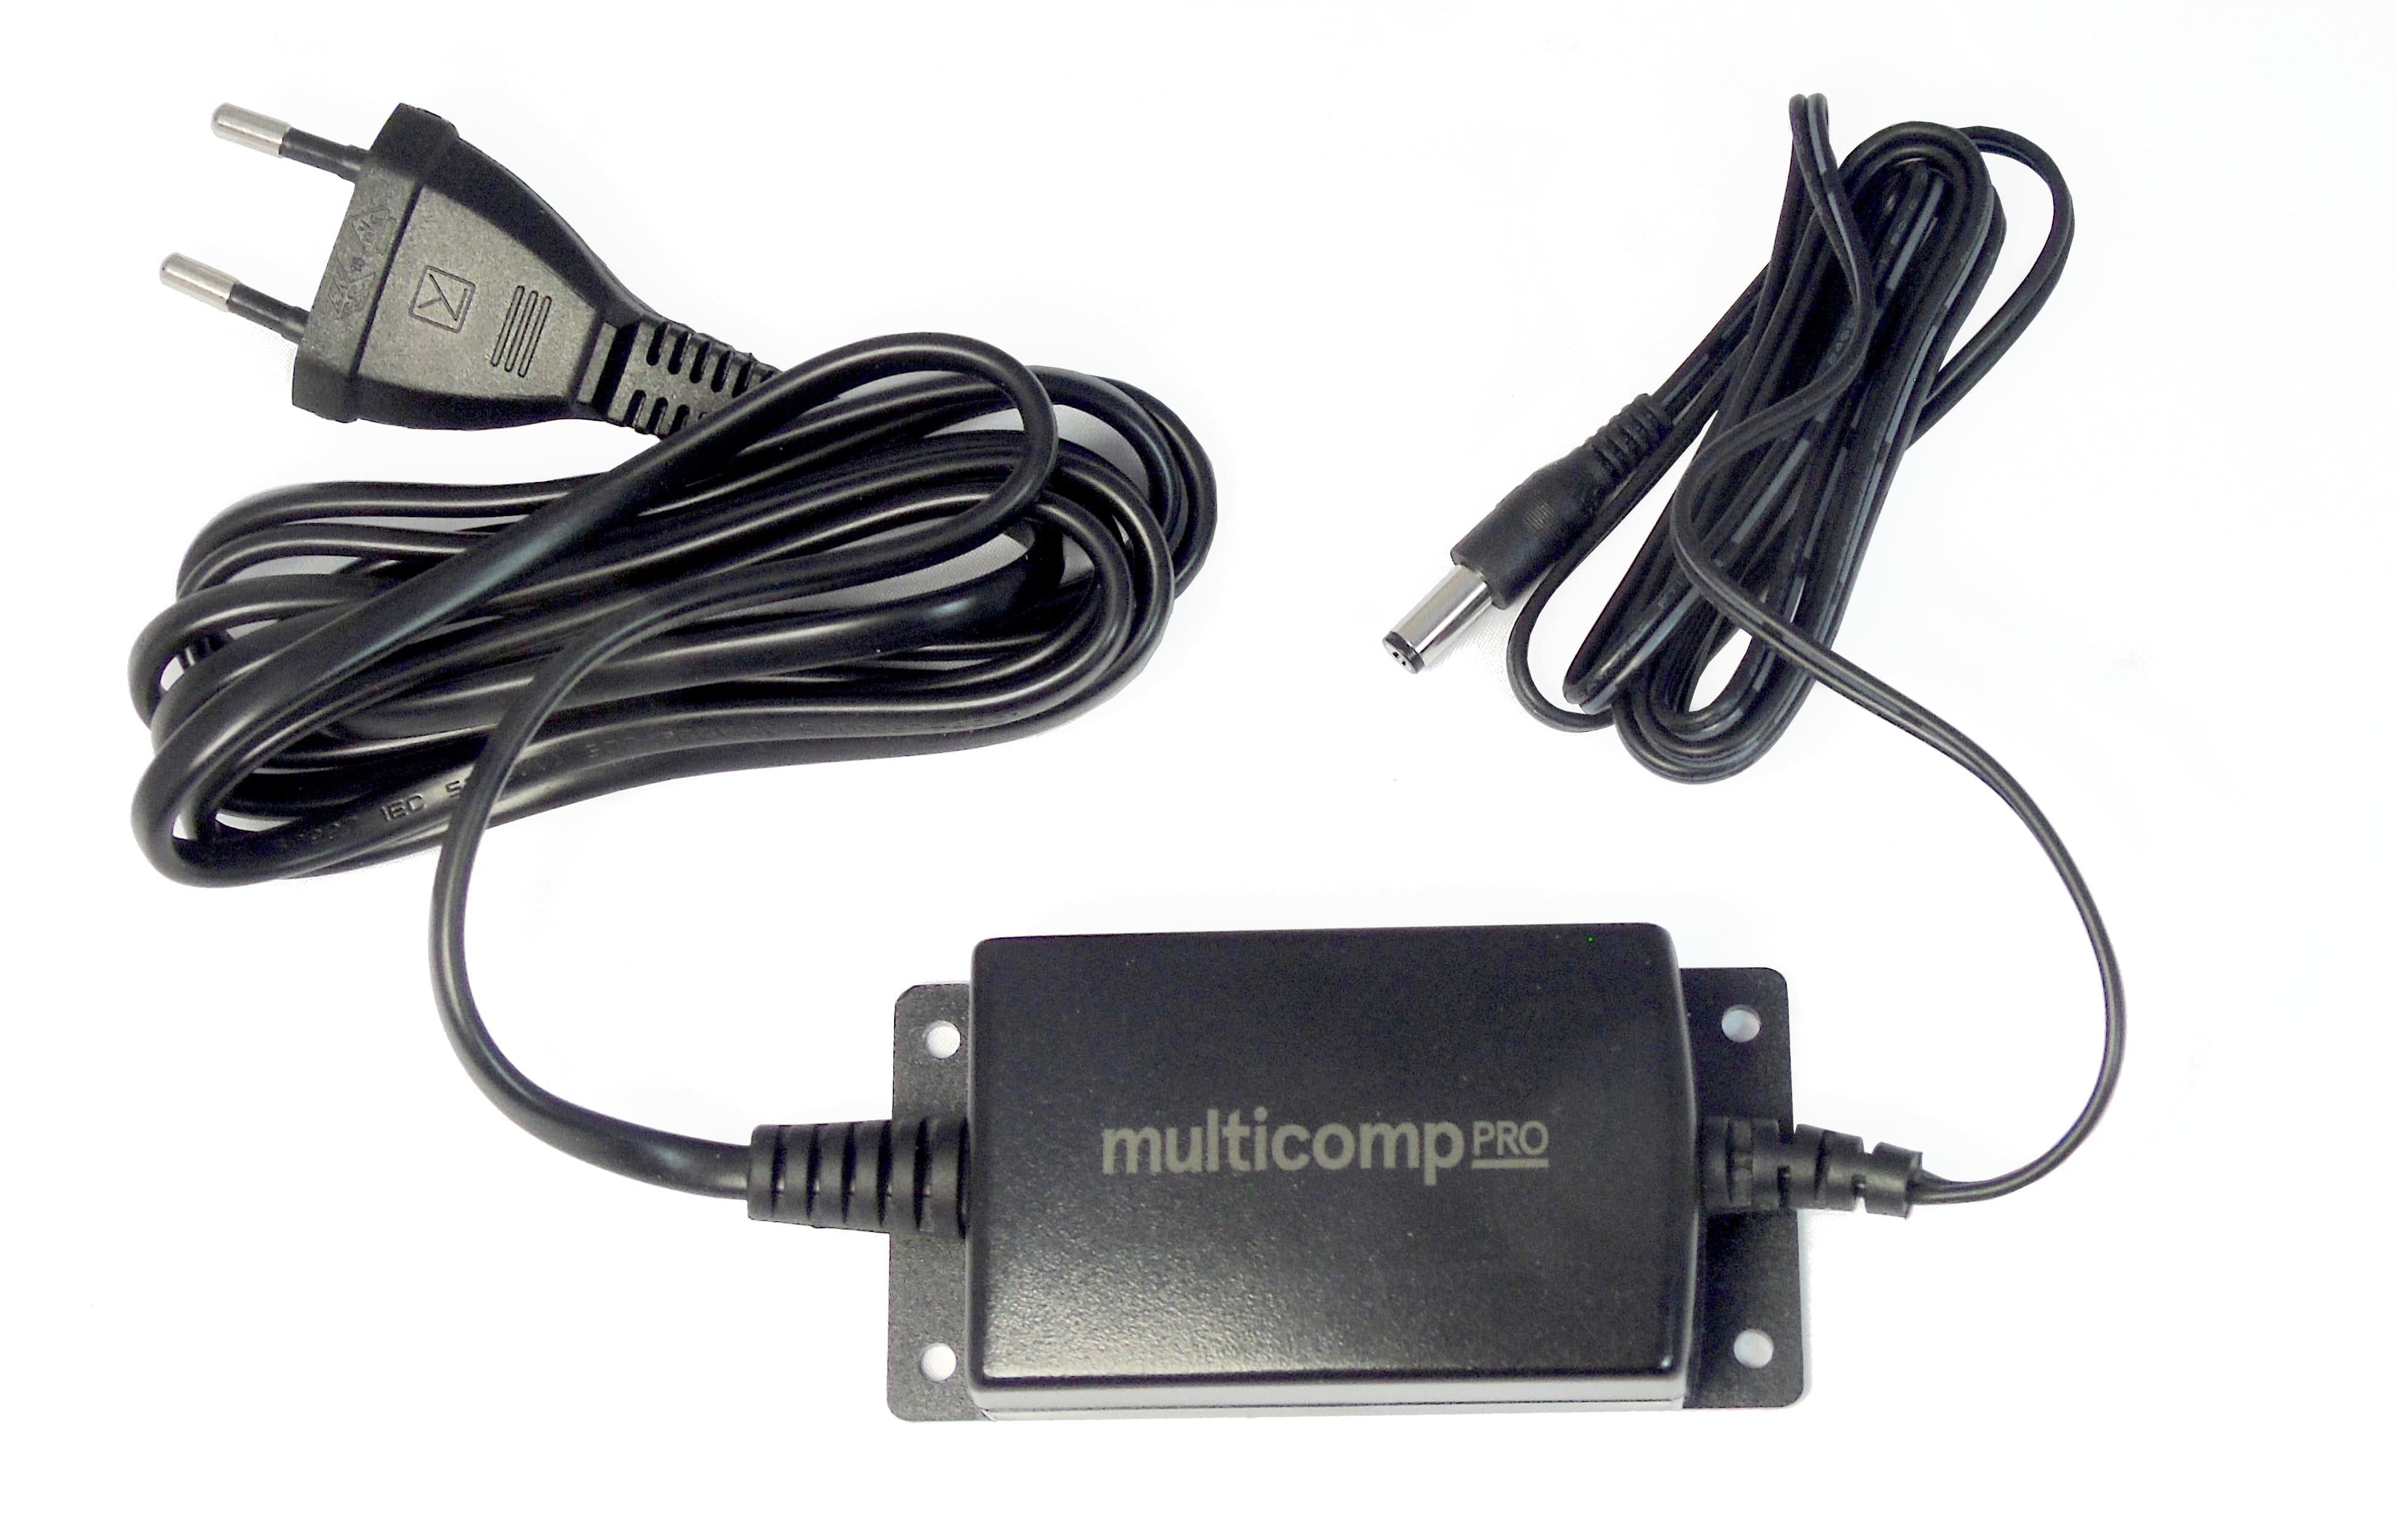 MULTICOMP PRO External Plug In Adaptor - Single Output MP001986 ADAPTER, AC-DC, 12V, 1A MULTICOMP PRO 3293064 MP001986